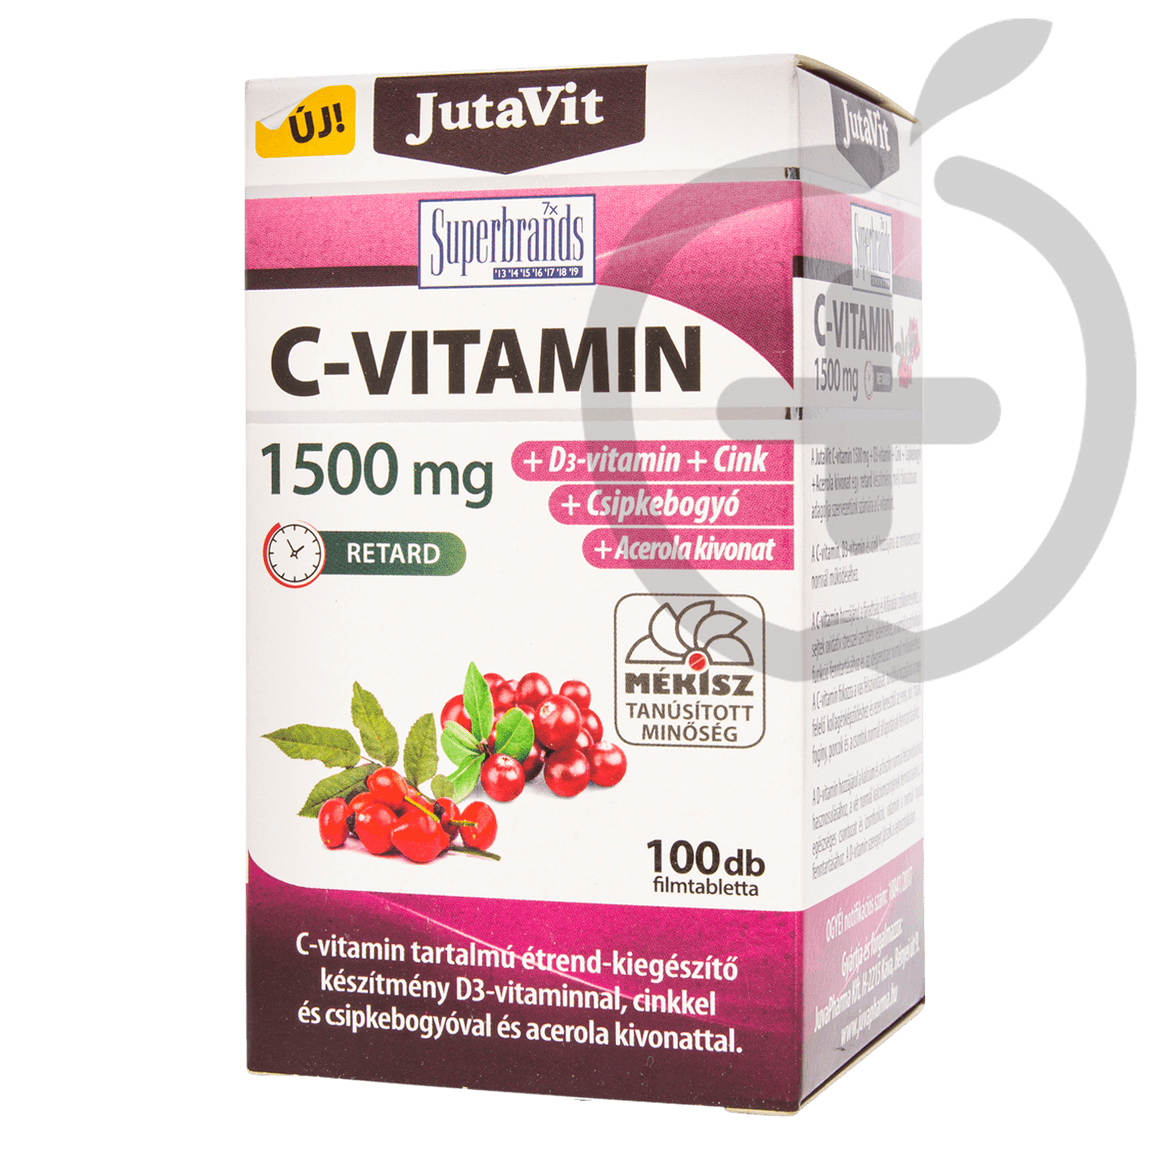 Jutavit C-vitamin 1500 mg +Cink +D3-vitamin +csipkebogyó +acerola kivonat filmtabletta